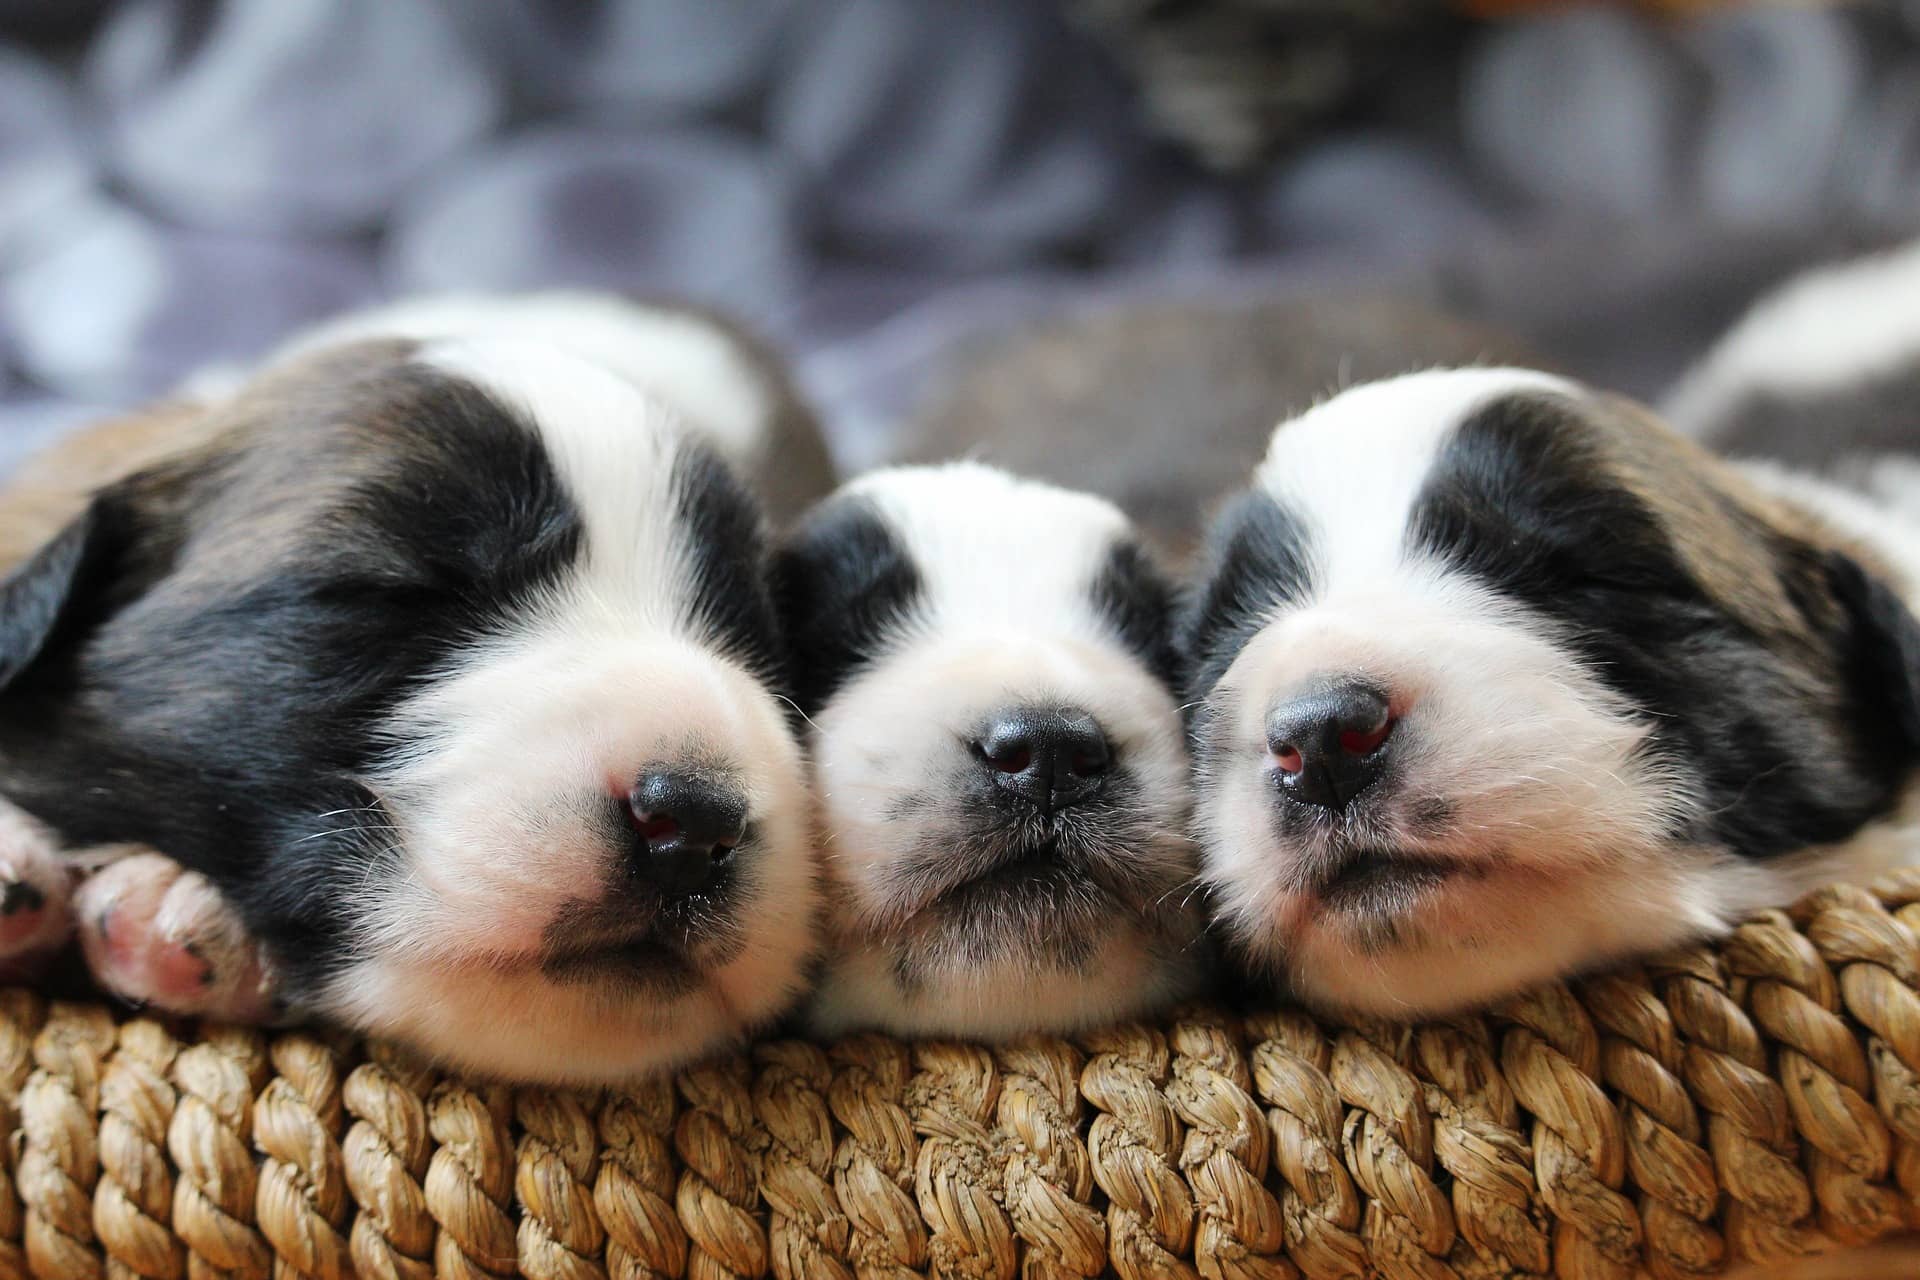 Choosing a puppy breeder